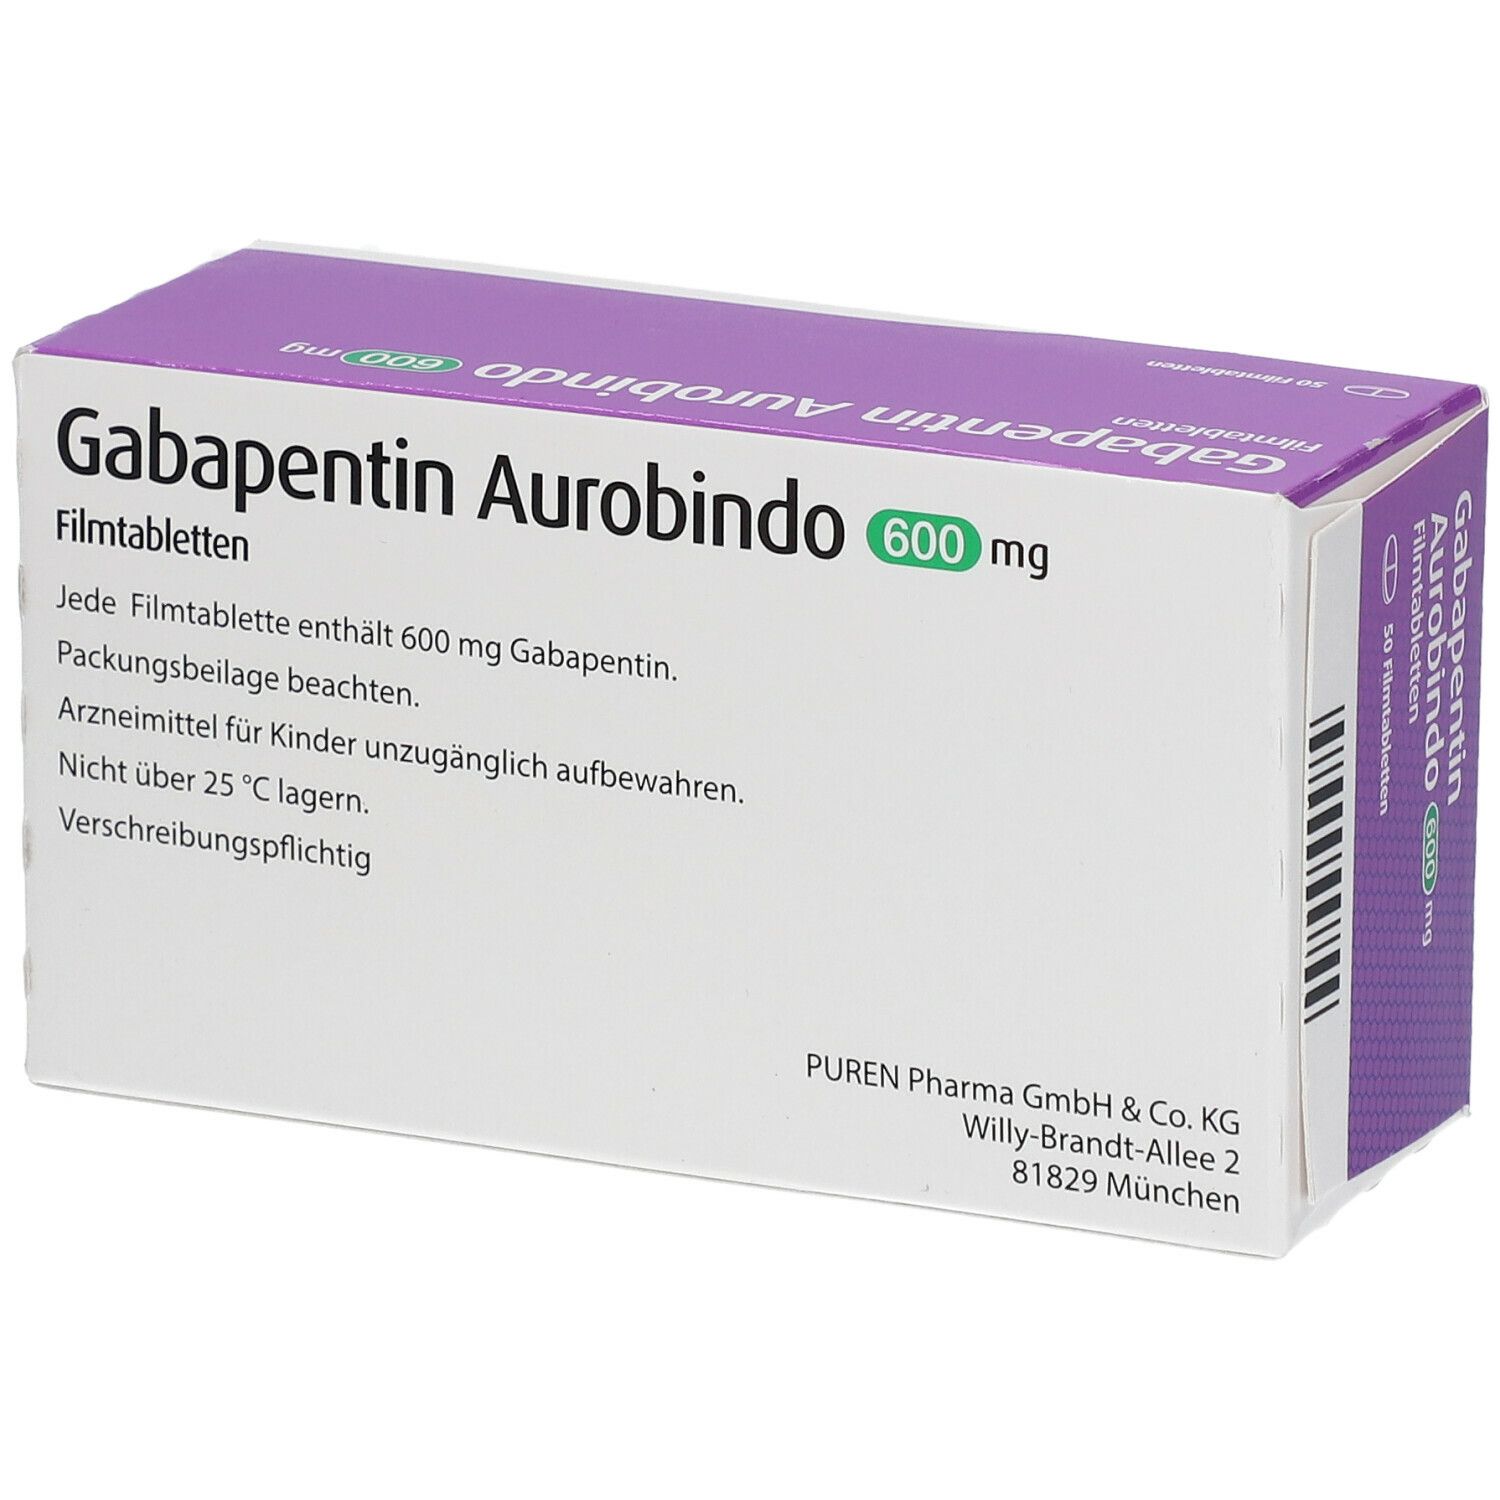 Gabapentin Aurobindo 600 mg